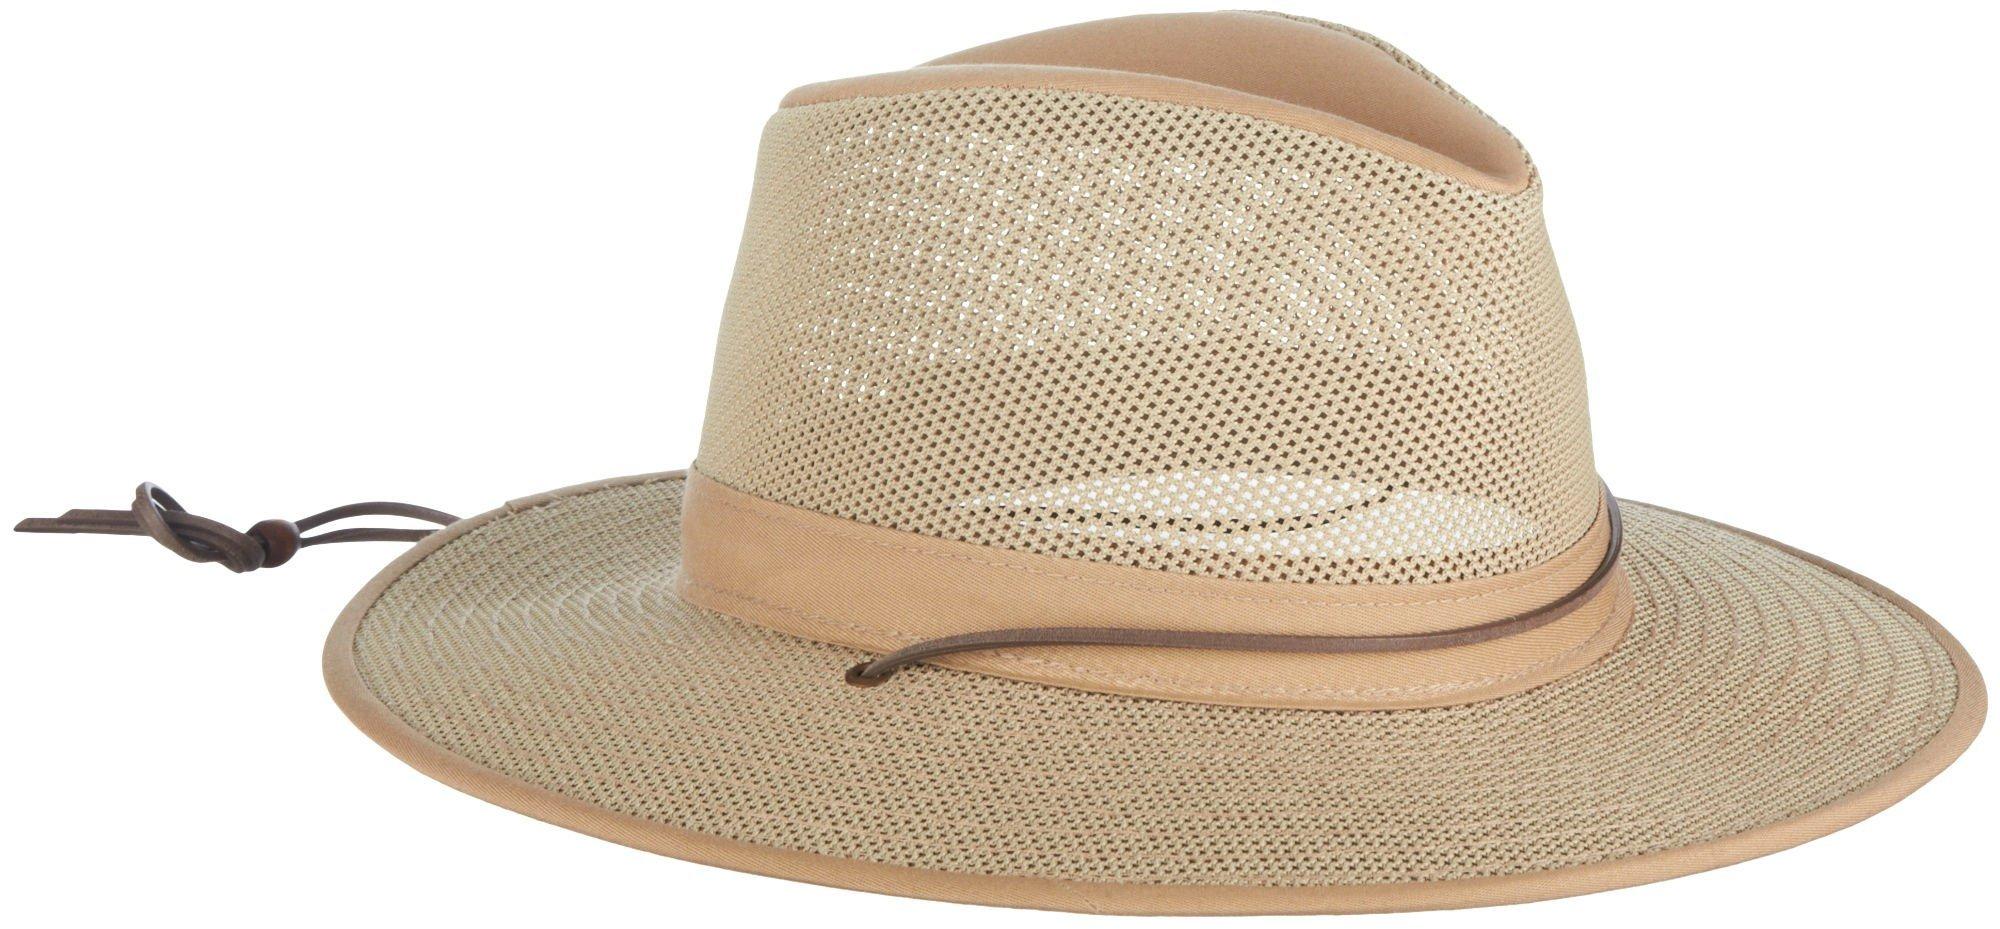 Men's Hats & Caps, Sun Hats for Men